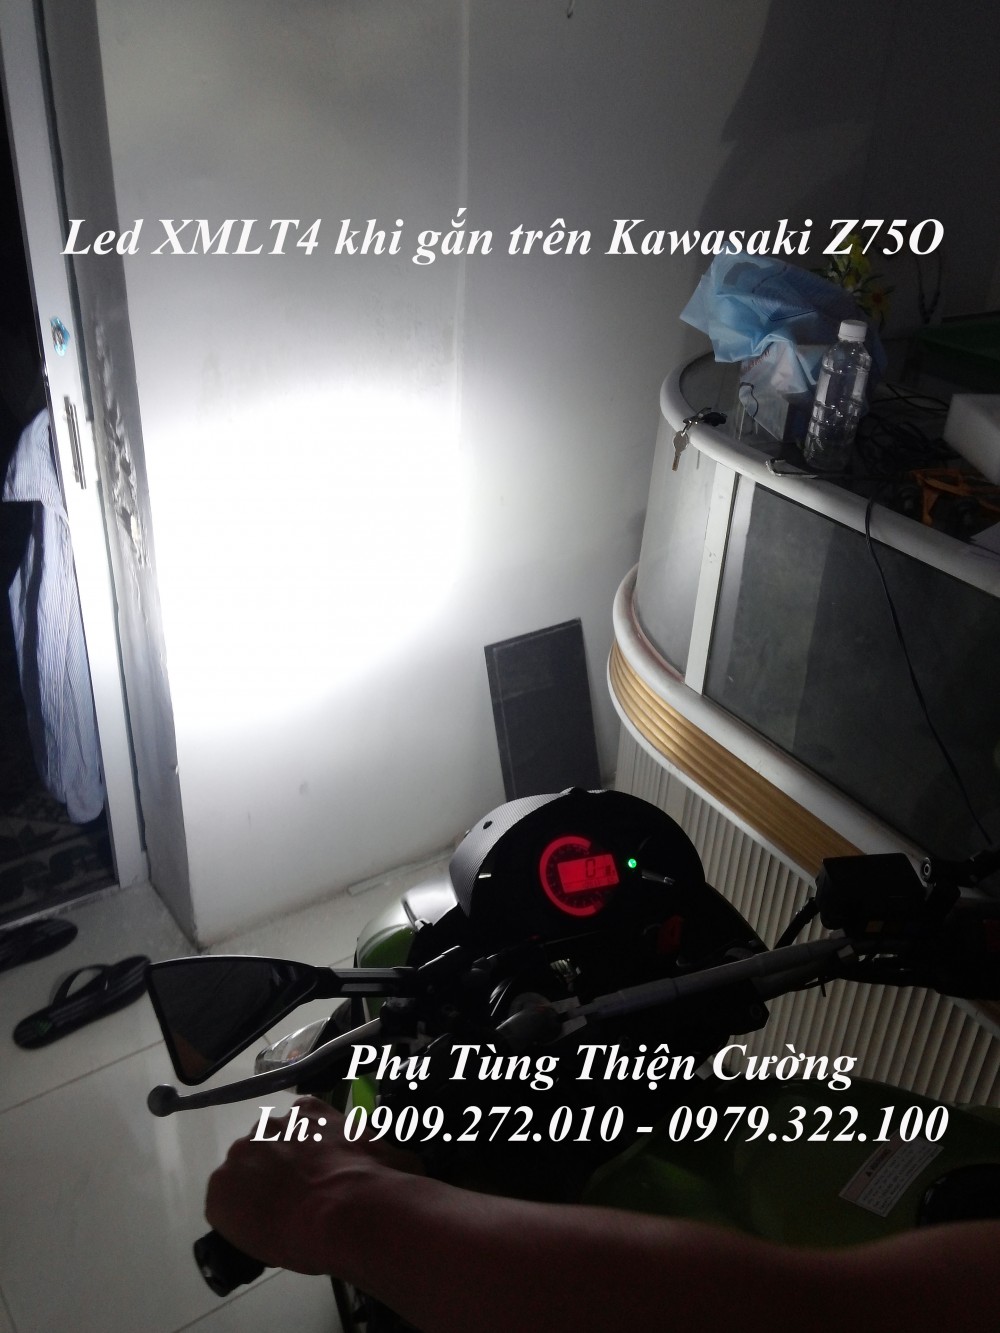 Bong den Led sieu sang danh cho Motor PKL Cree XMLT4 - 24